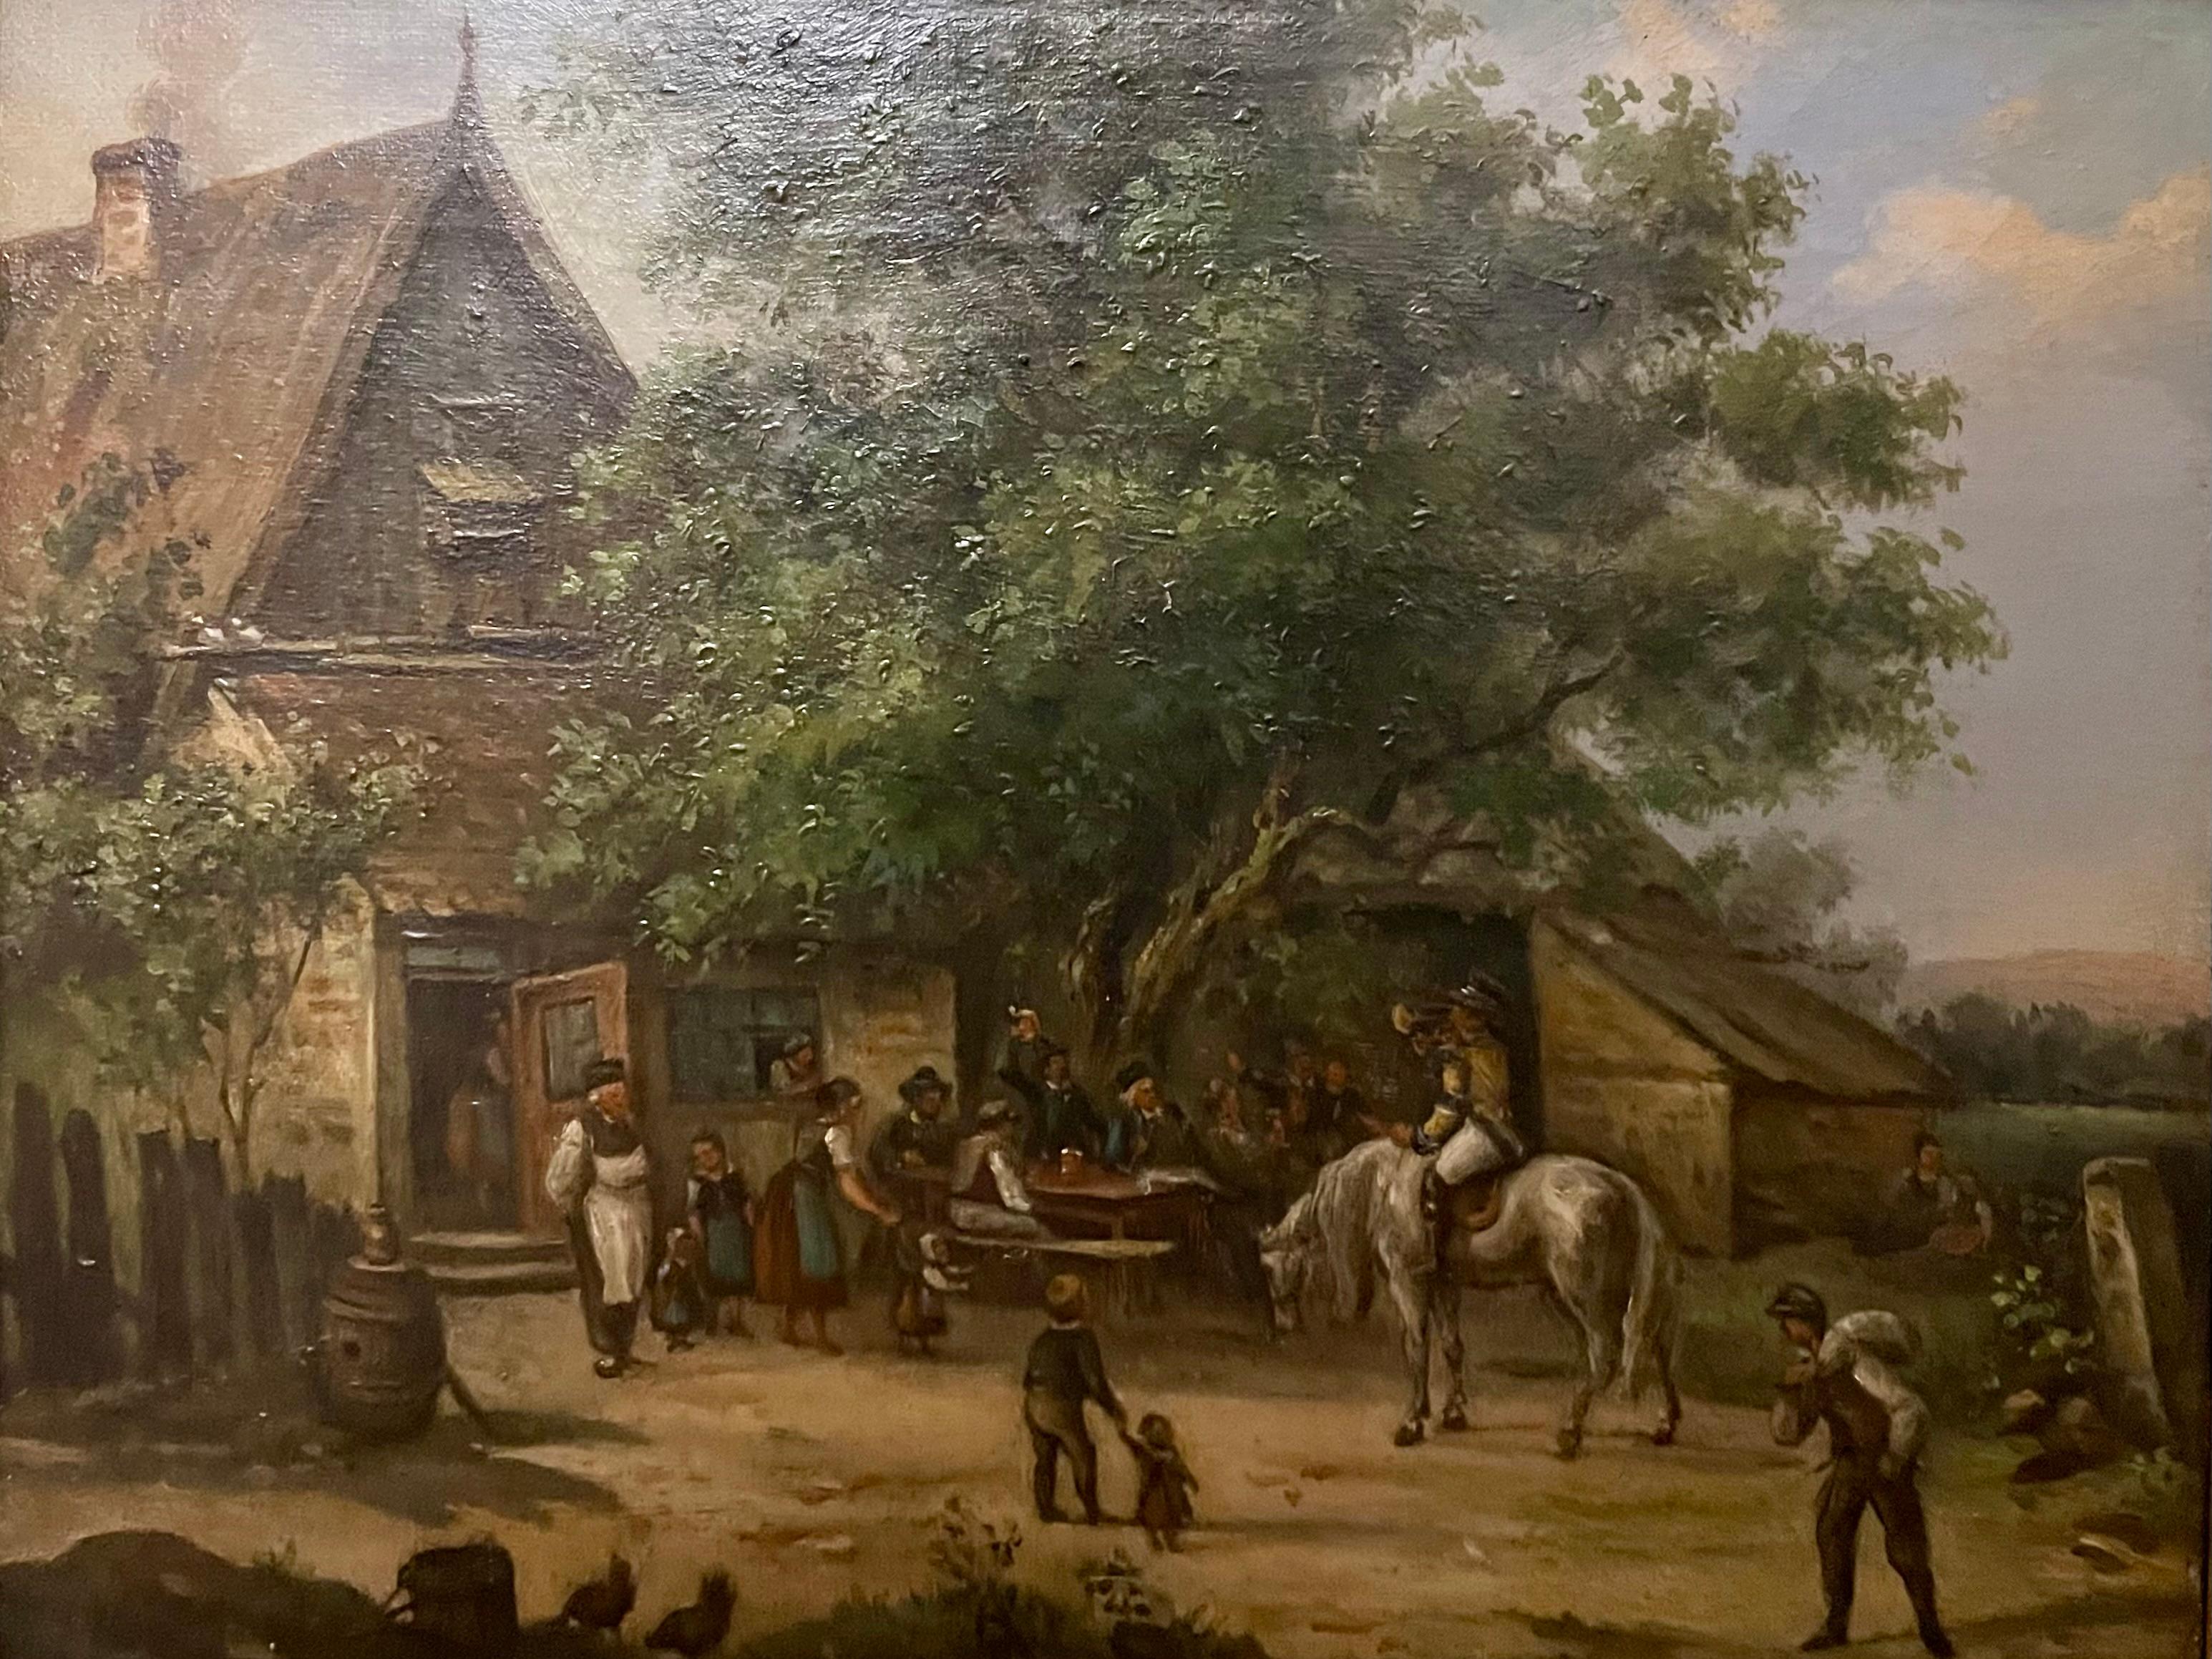 Village Scene - Painting by Arthur Georg Ramberg